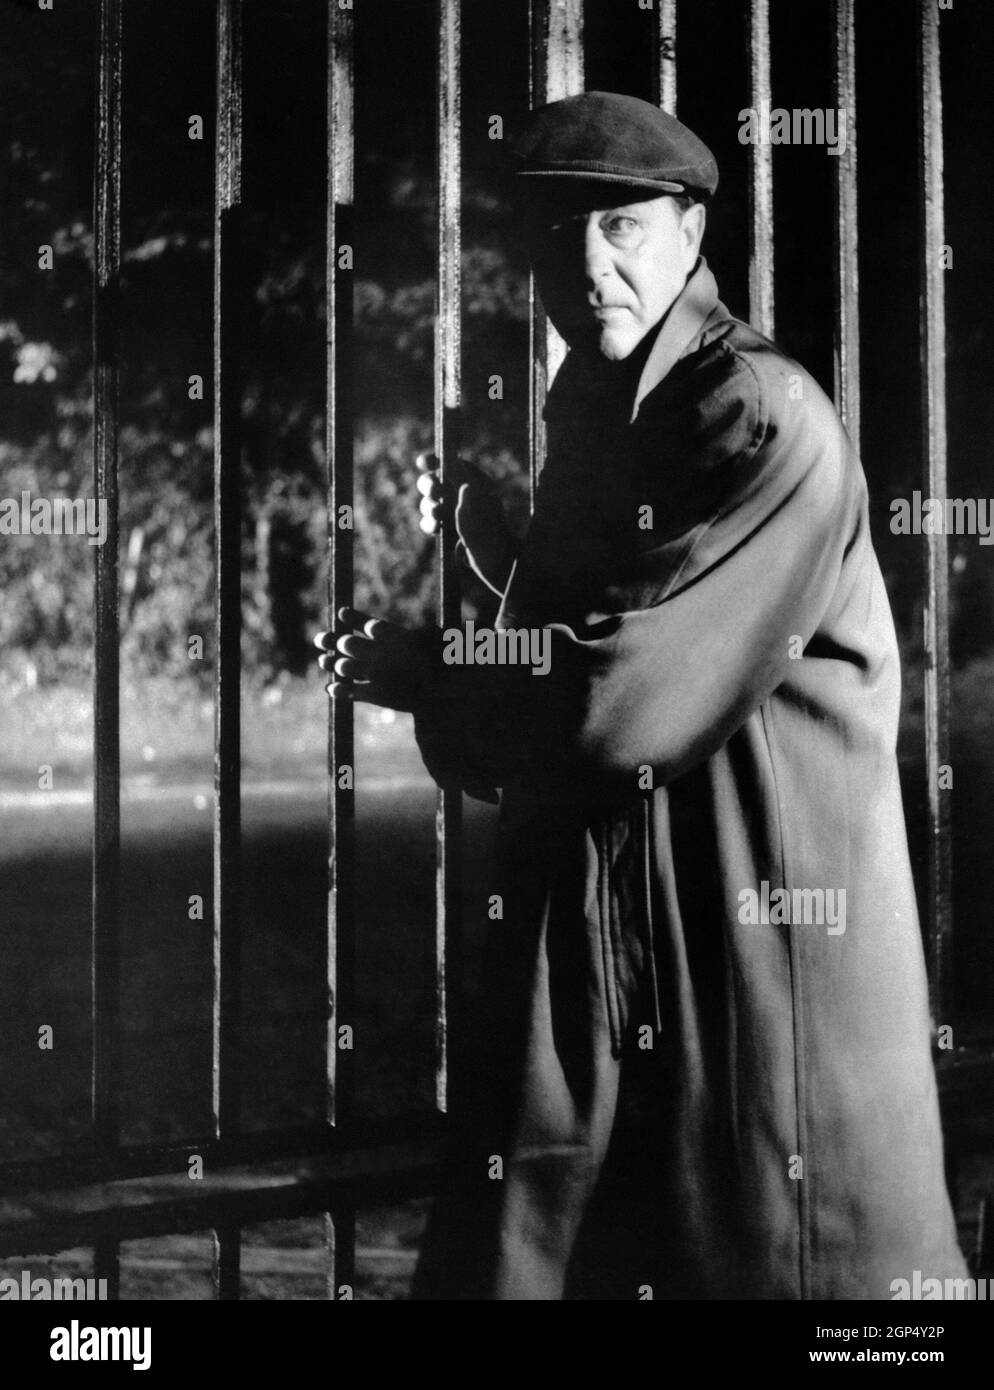 THE SAFECRACKER, Ray Milland, 1958 Stock Photo - Alamy